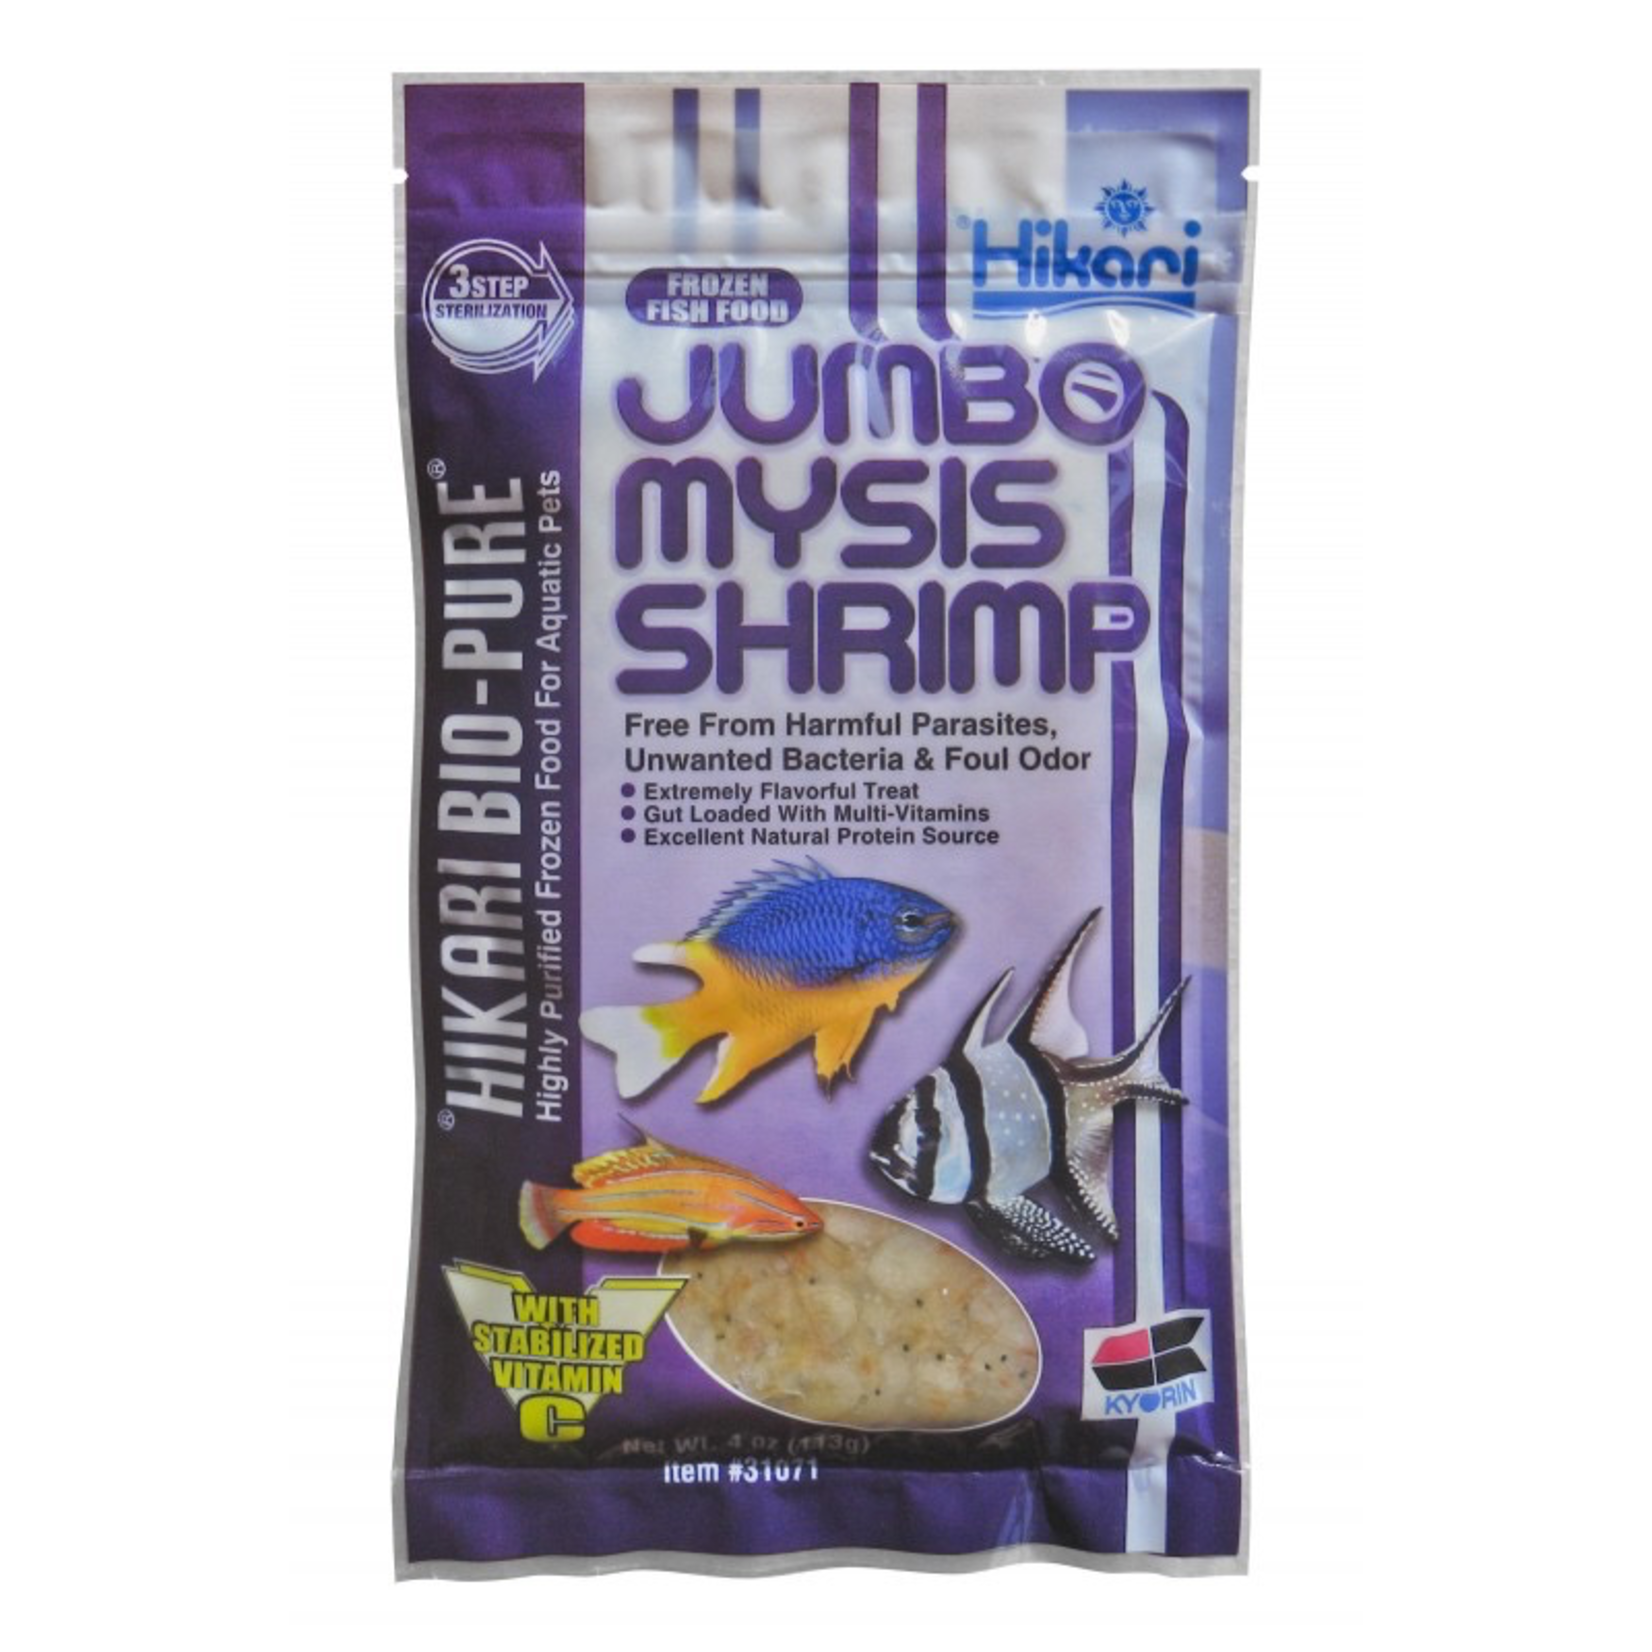 HIKARI (P) Frozen Jumbo Mysis Shrimp - Flatpack - 4 oz